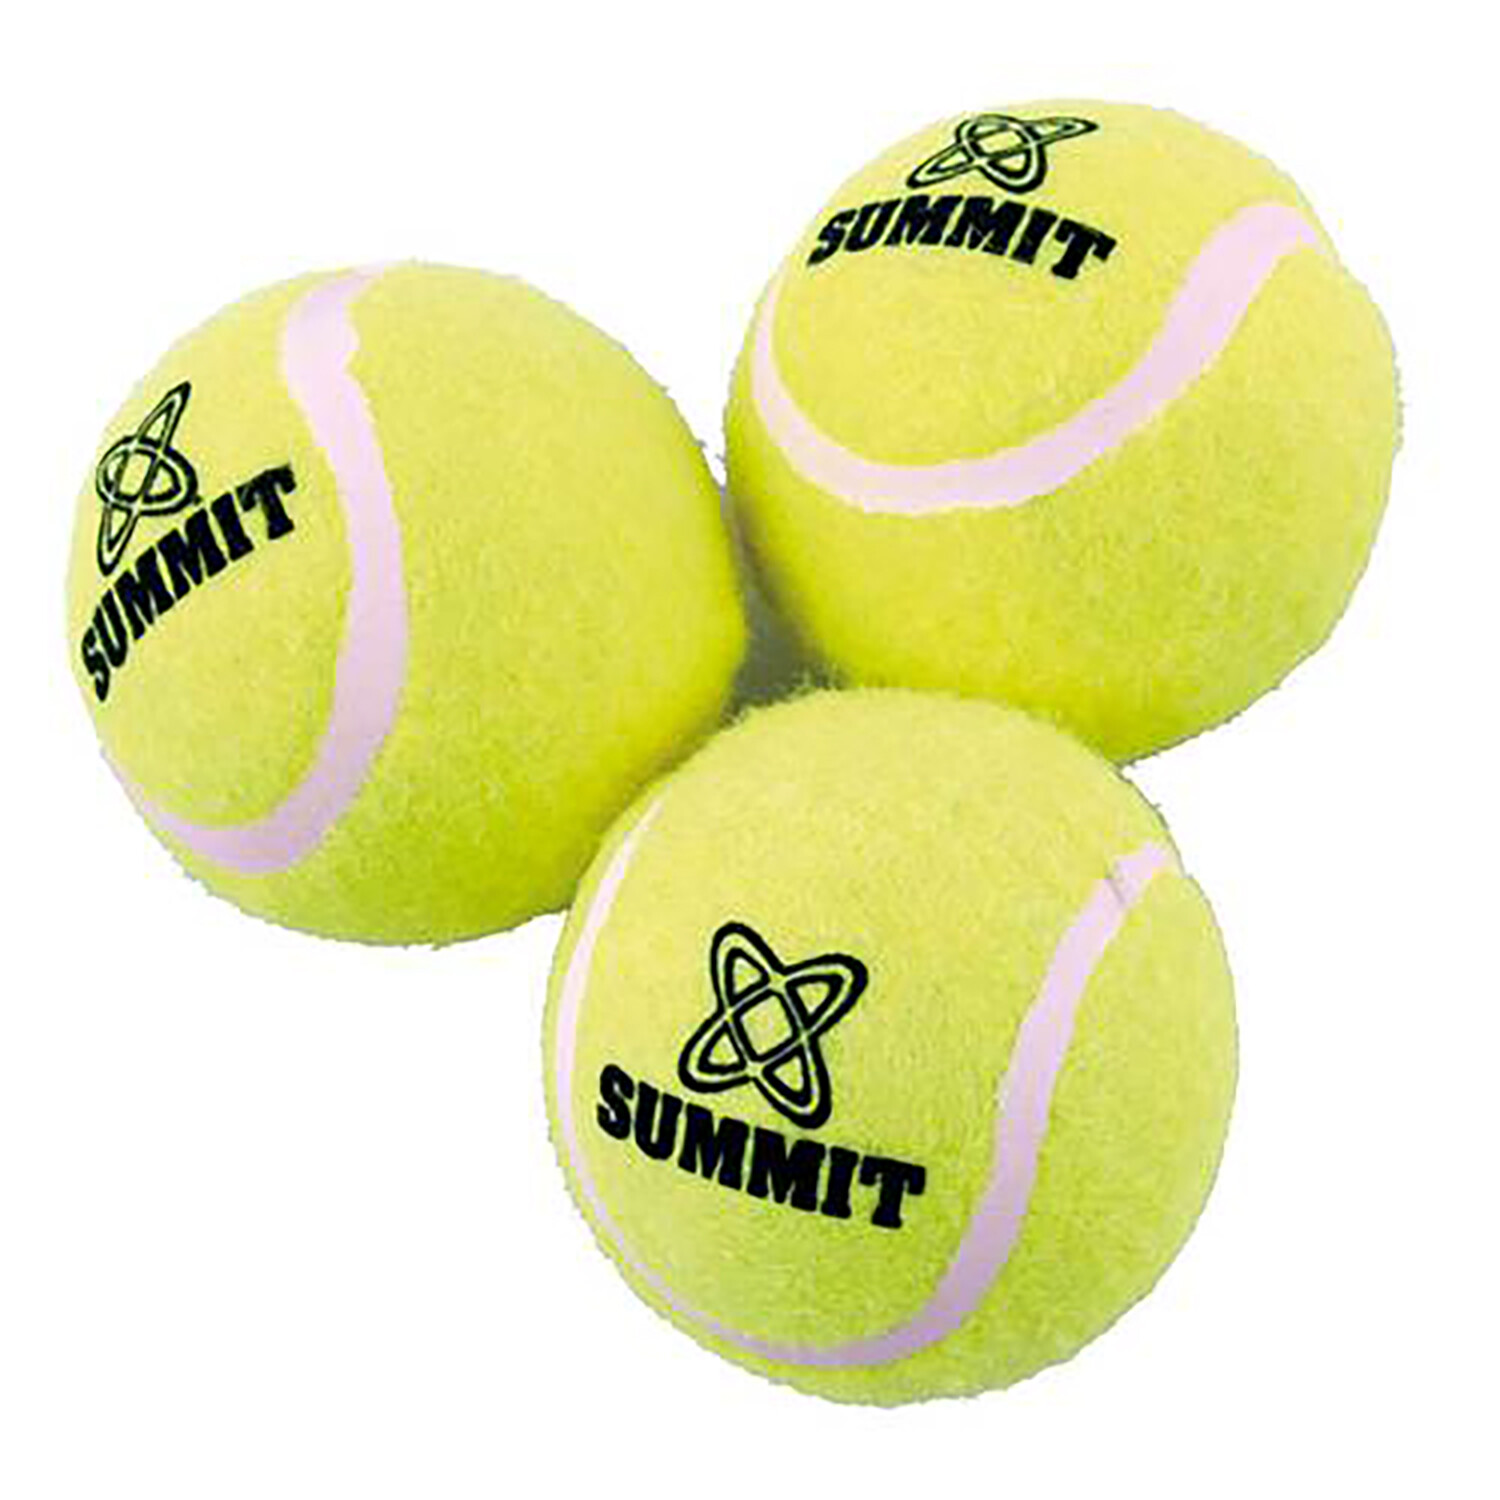 Pack of Three Summit Tennis Balls Image